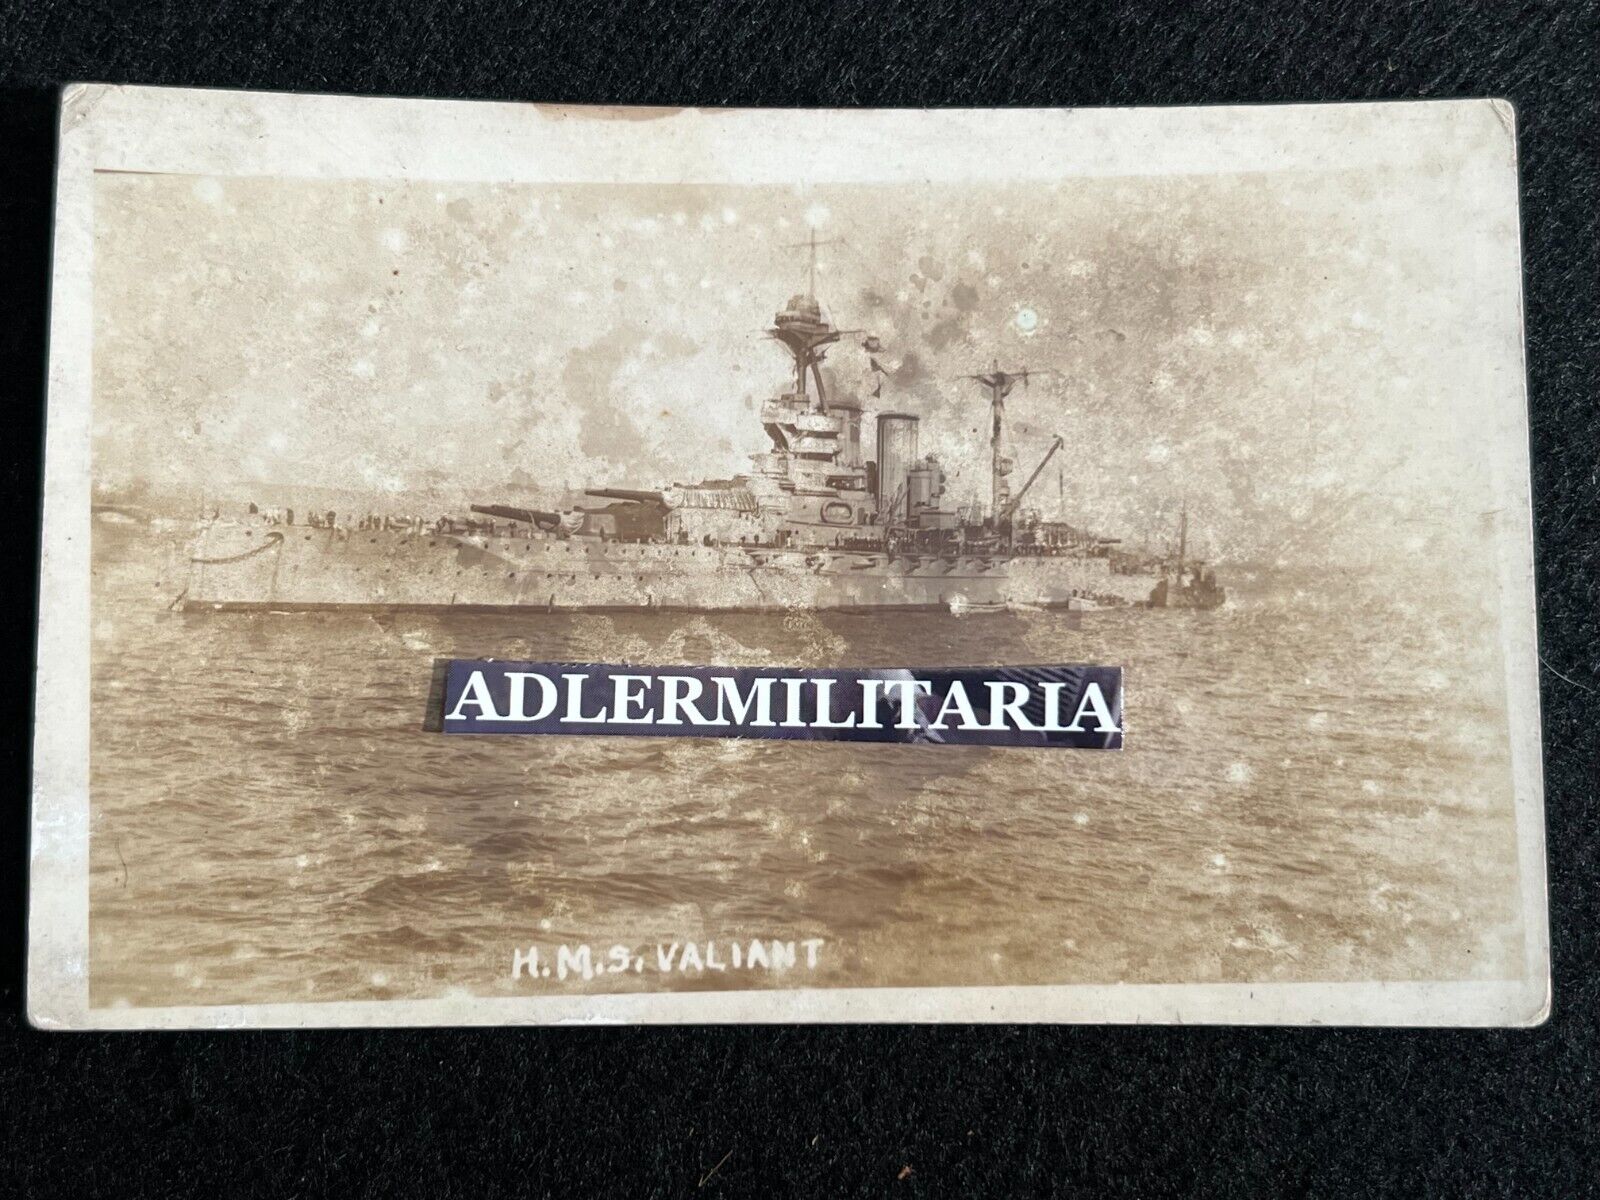 WWI H.M.S Valiant Image - Post Card - Period Item - 1914 - 1918